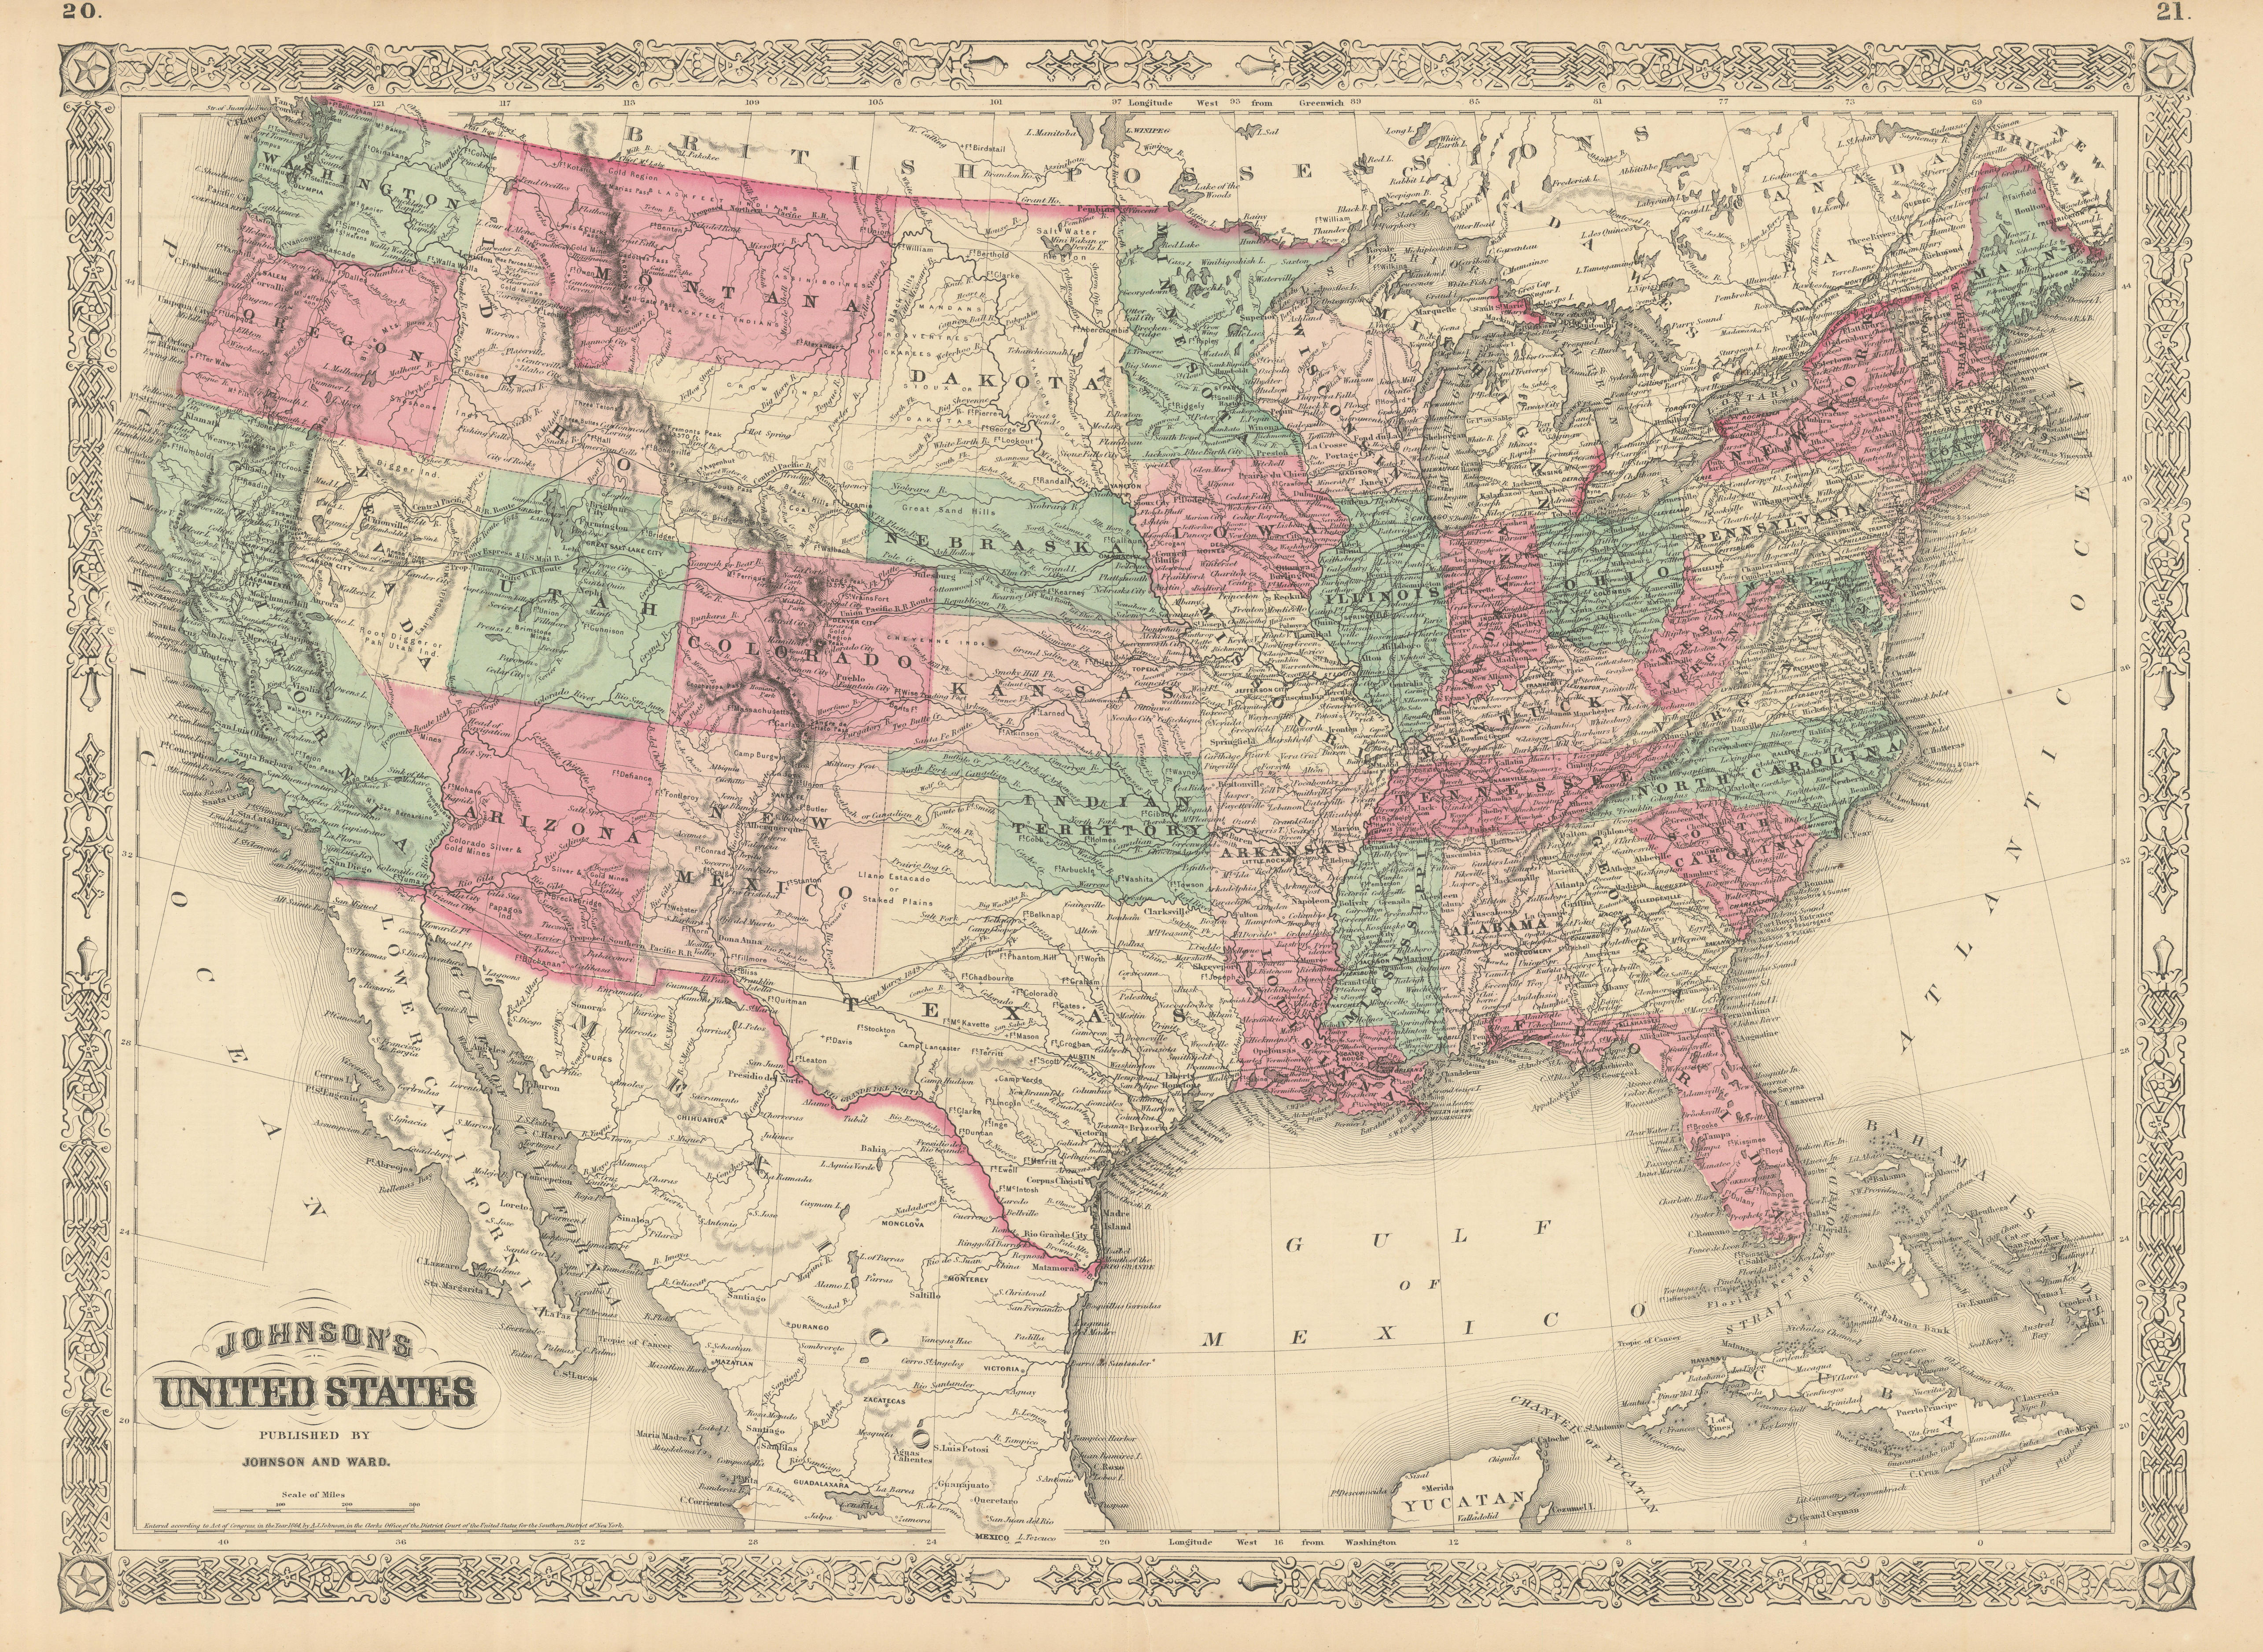 Associate Product Johnson's United States. Wyoming part of Dakota Territory 1866 old antique map